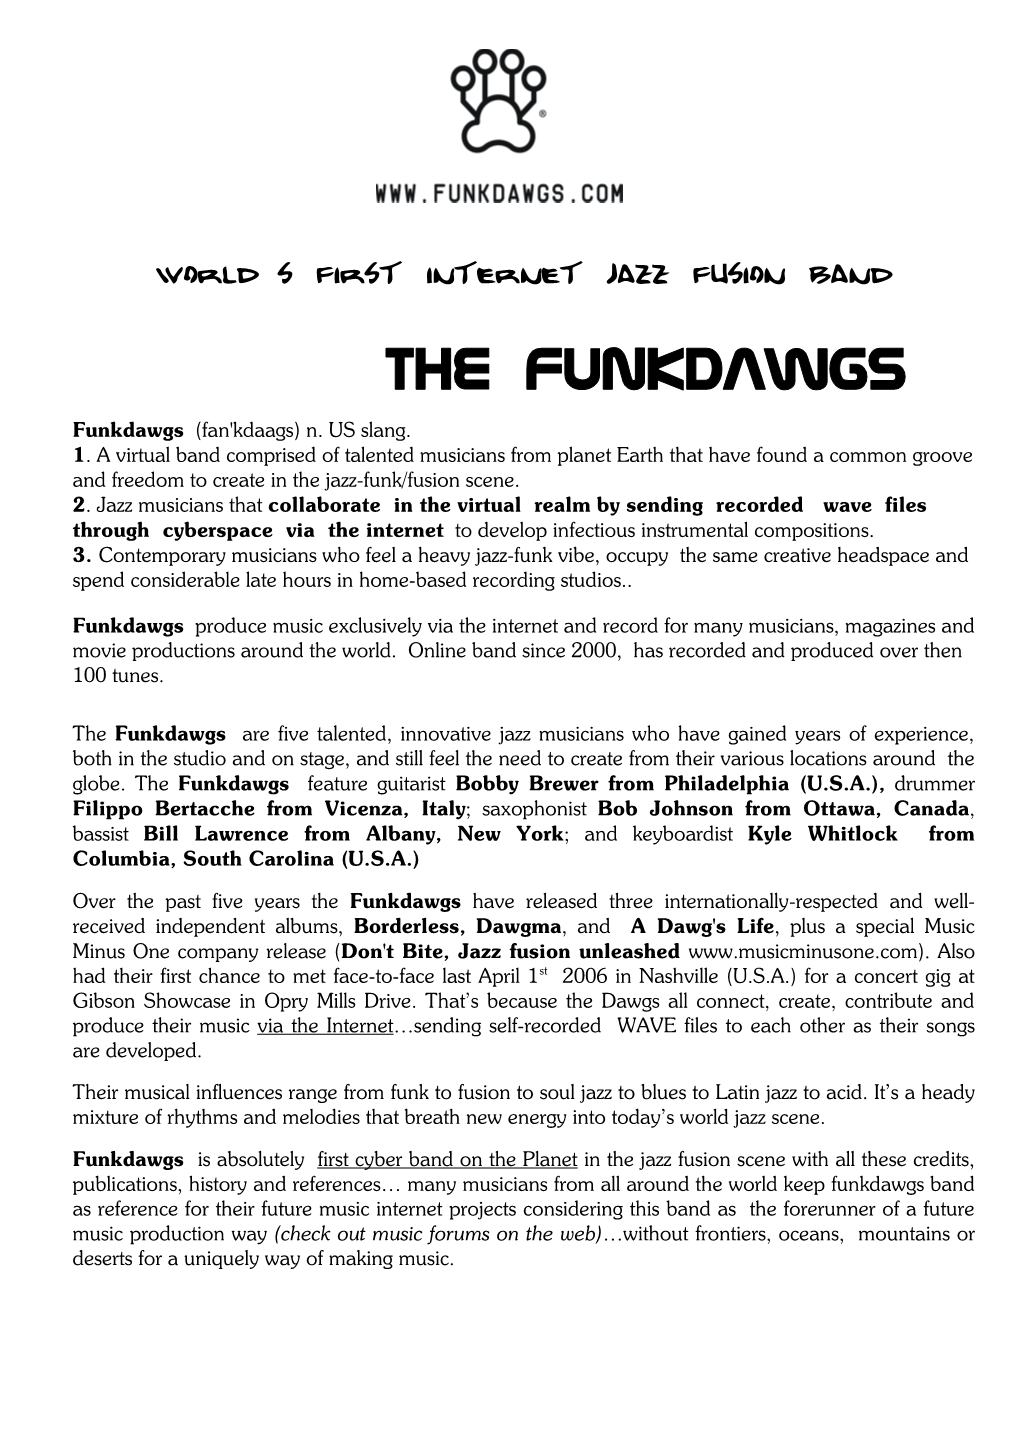 The Funkdawgs